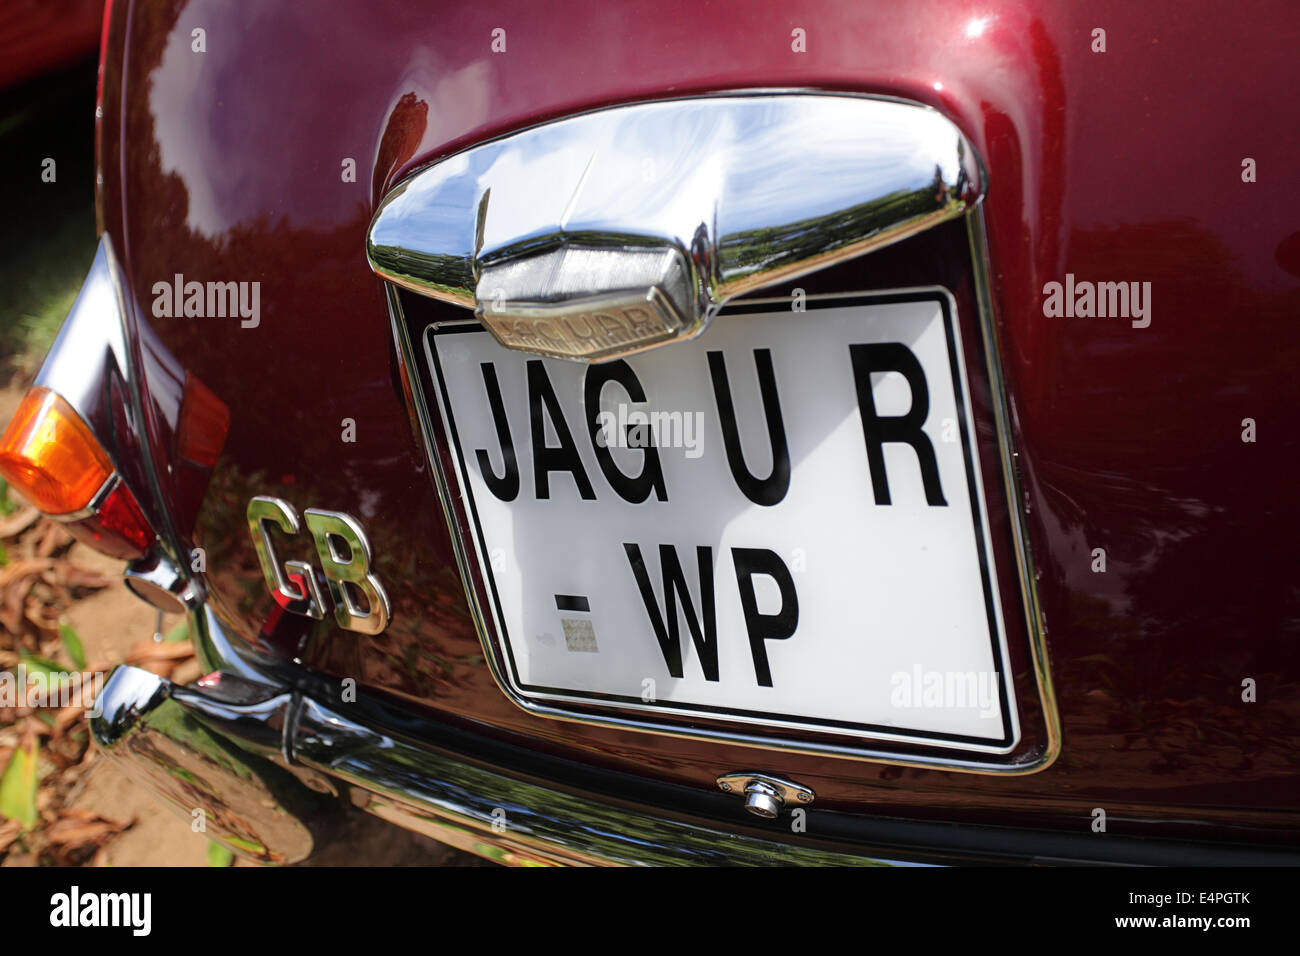 Vintage Jaguar boot / Dettaglio trunk e JAG U R numero di targa Foto Stock